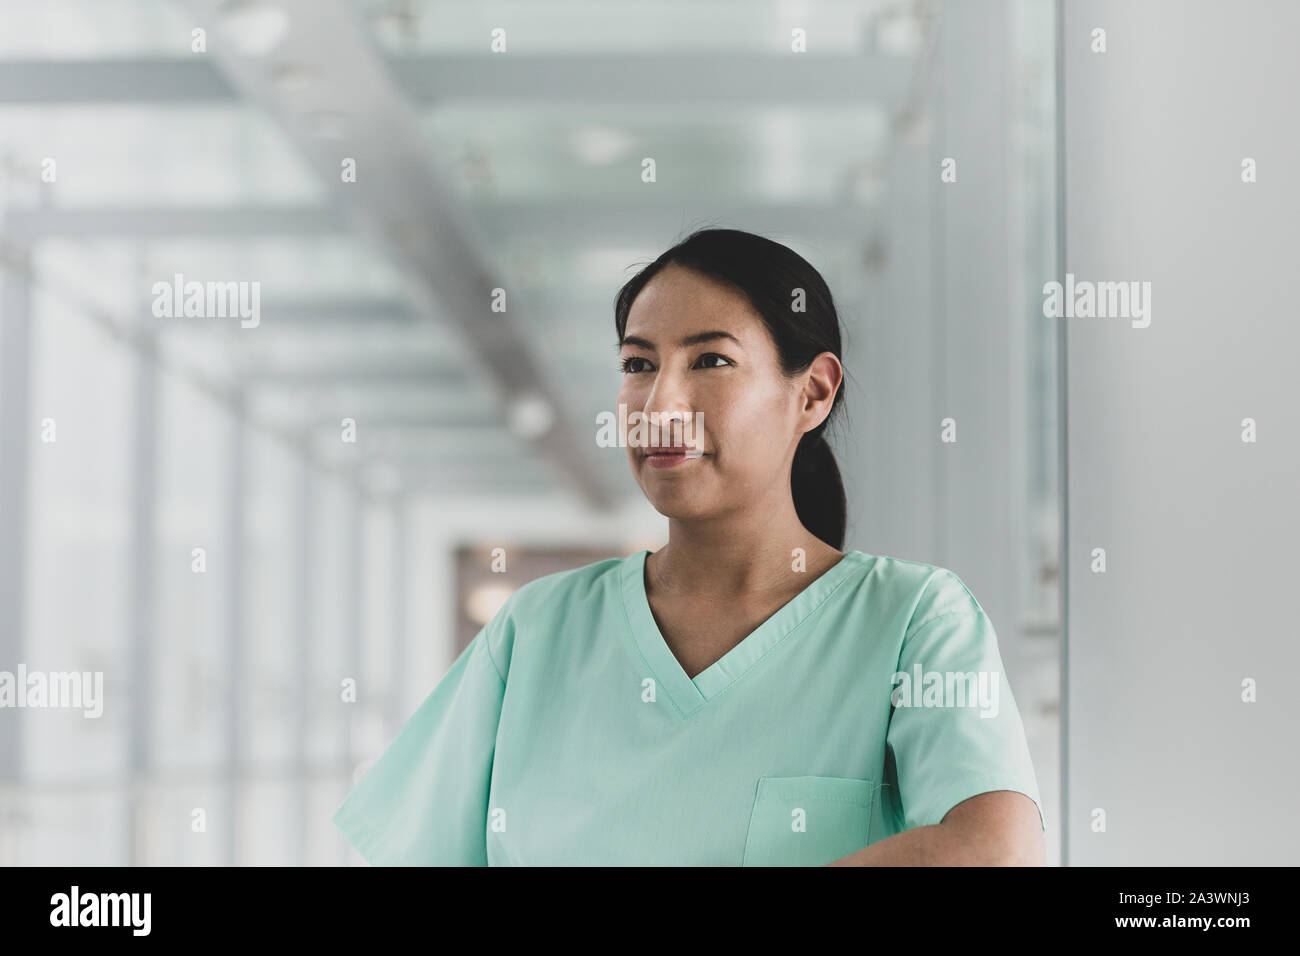 Portrait of confident female surgeon in Hospital Stock Photo